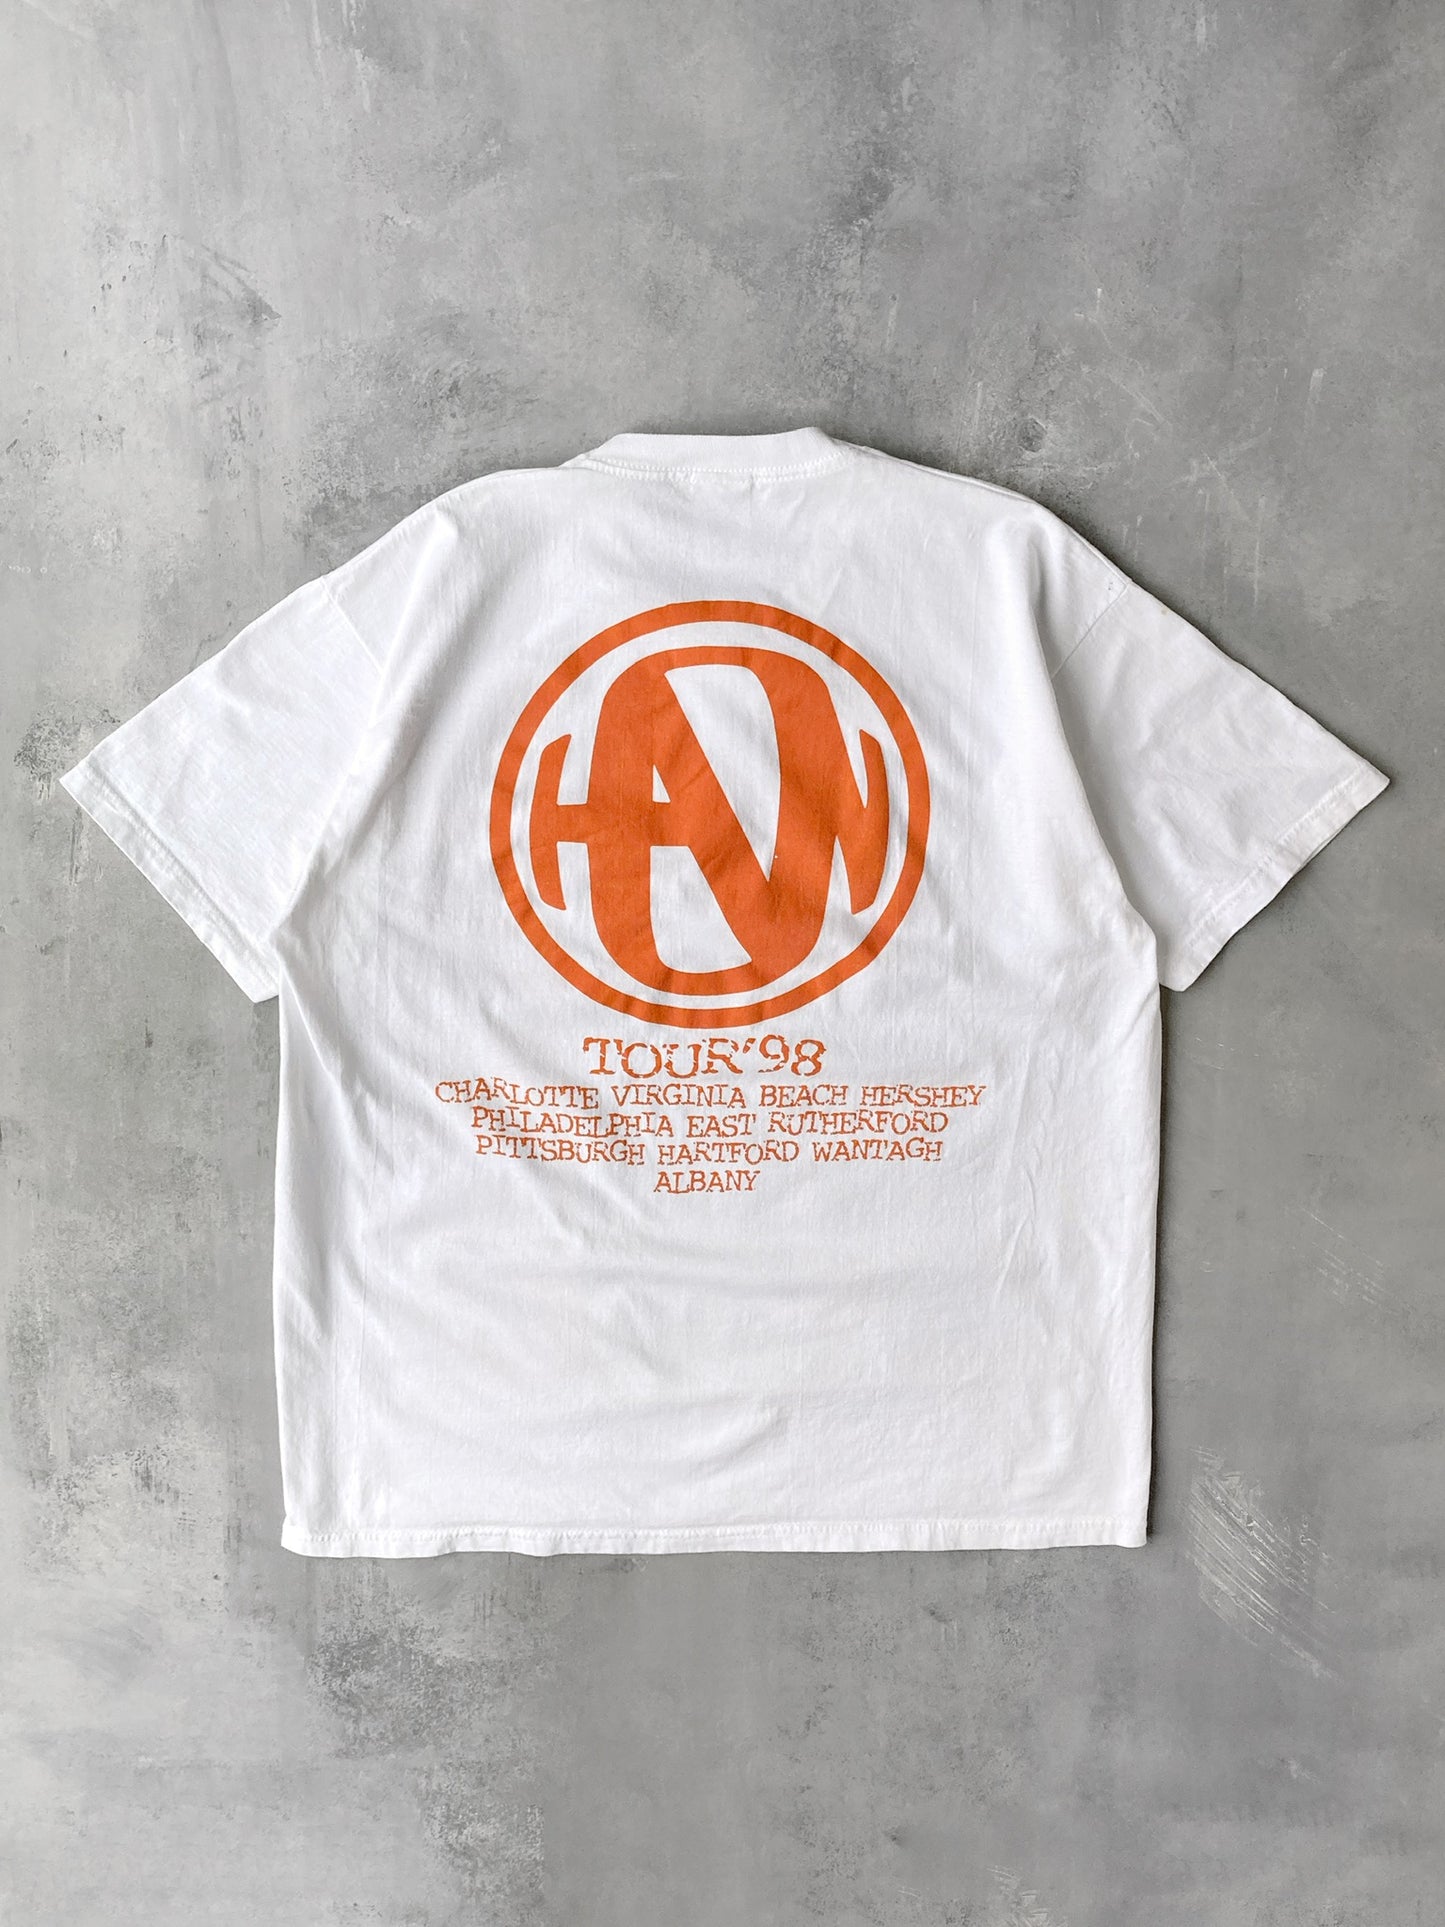 Hanson Tour '98 T-Shirt - XL